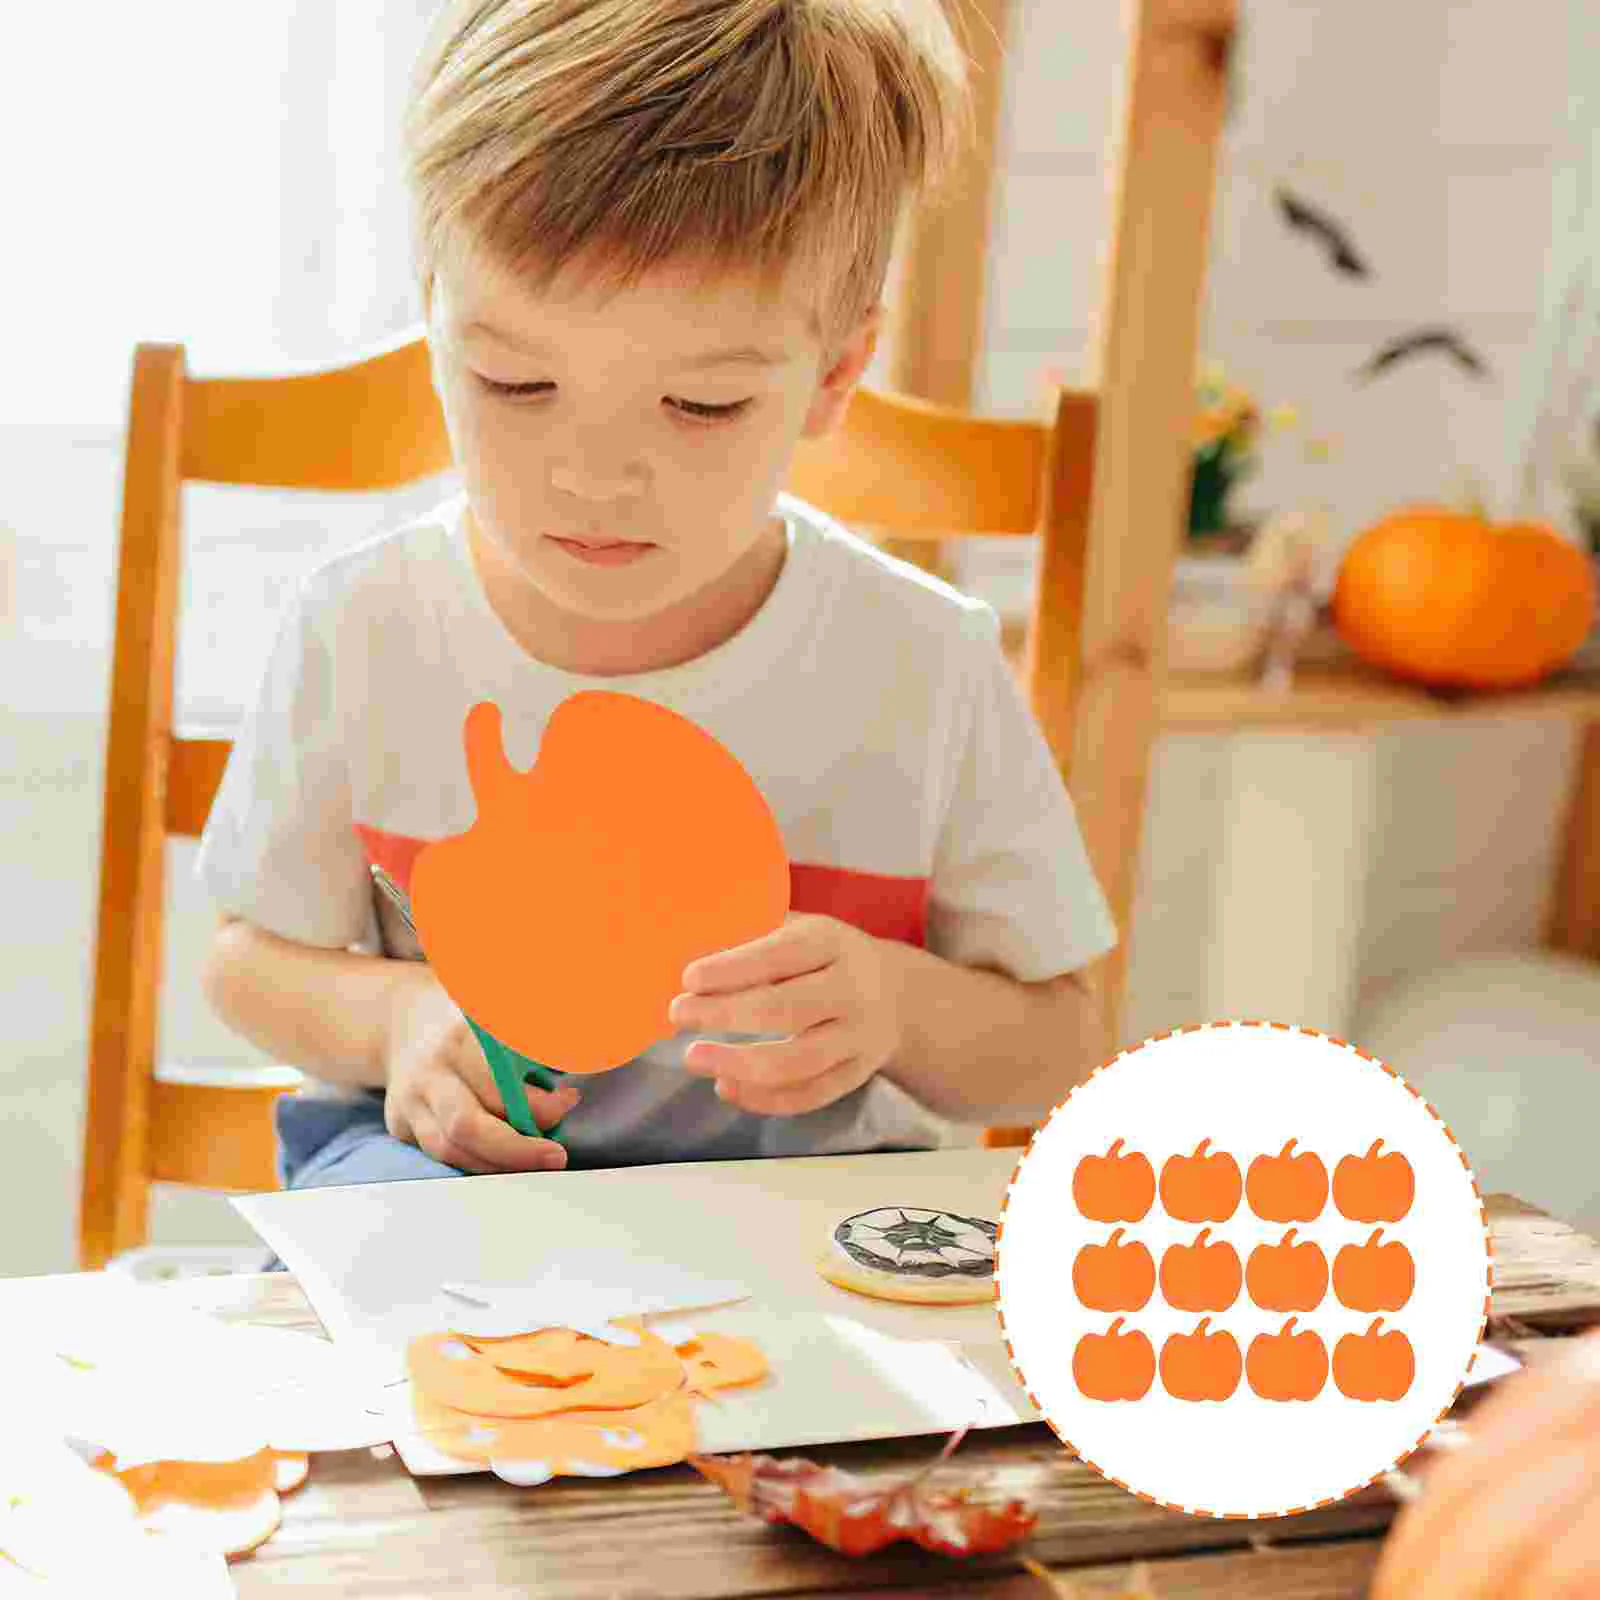 

12 Pcs Pumpkin DIY Patches Kids Crafts Cartoon Slices Halloween Hollow Out Chips Kindergarten Decorative Eva Child